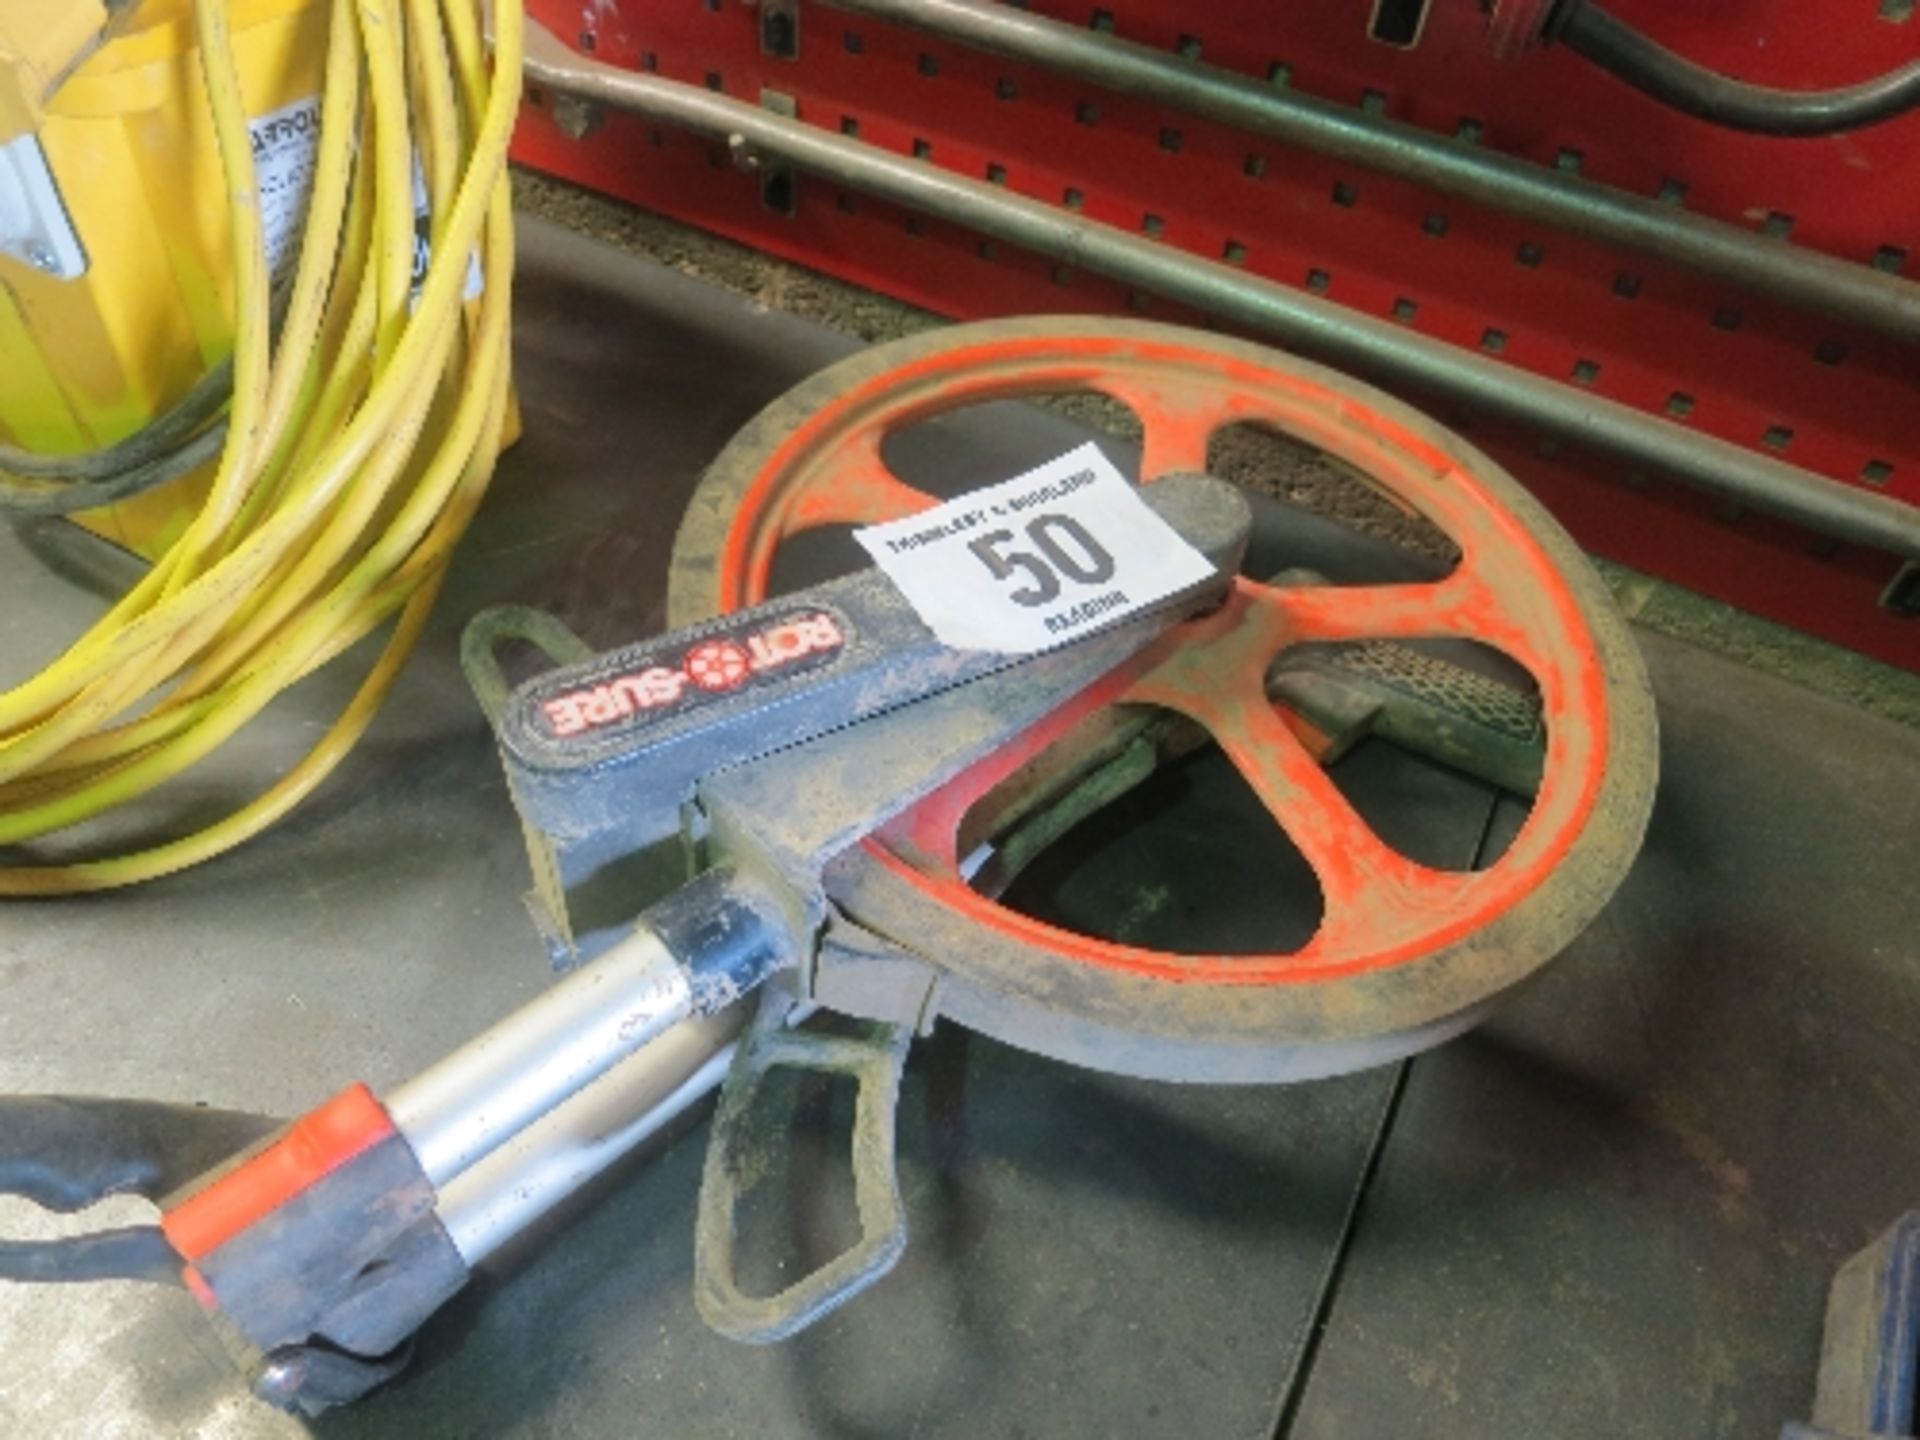 Rotosure measuring wheel